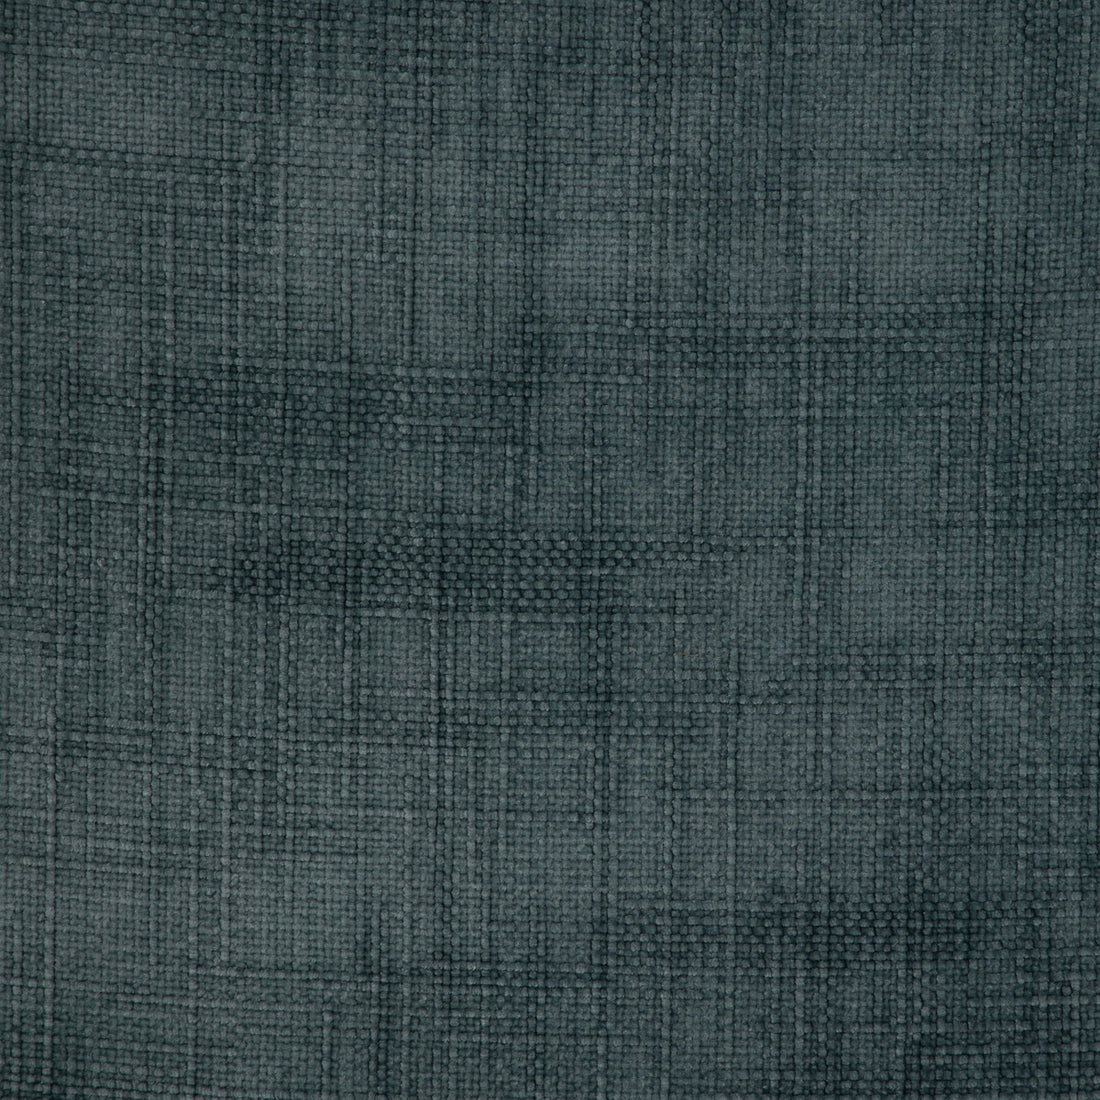 Kravet Smart fabric in 36991-511 color - pattern 36991.511.0 - by Kravet Smart in the Performance Kravetarmor collection